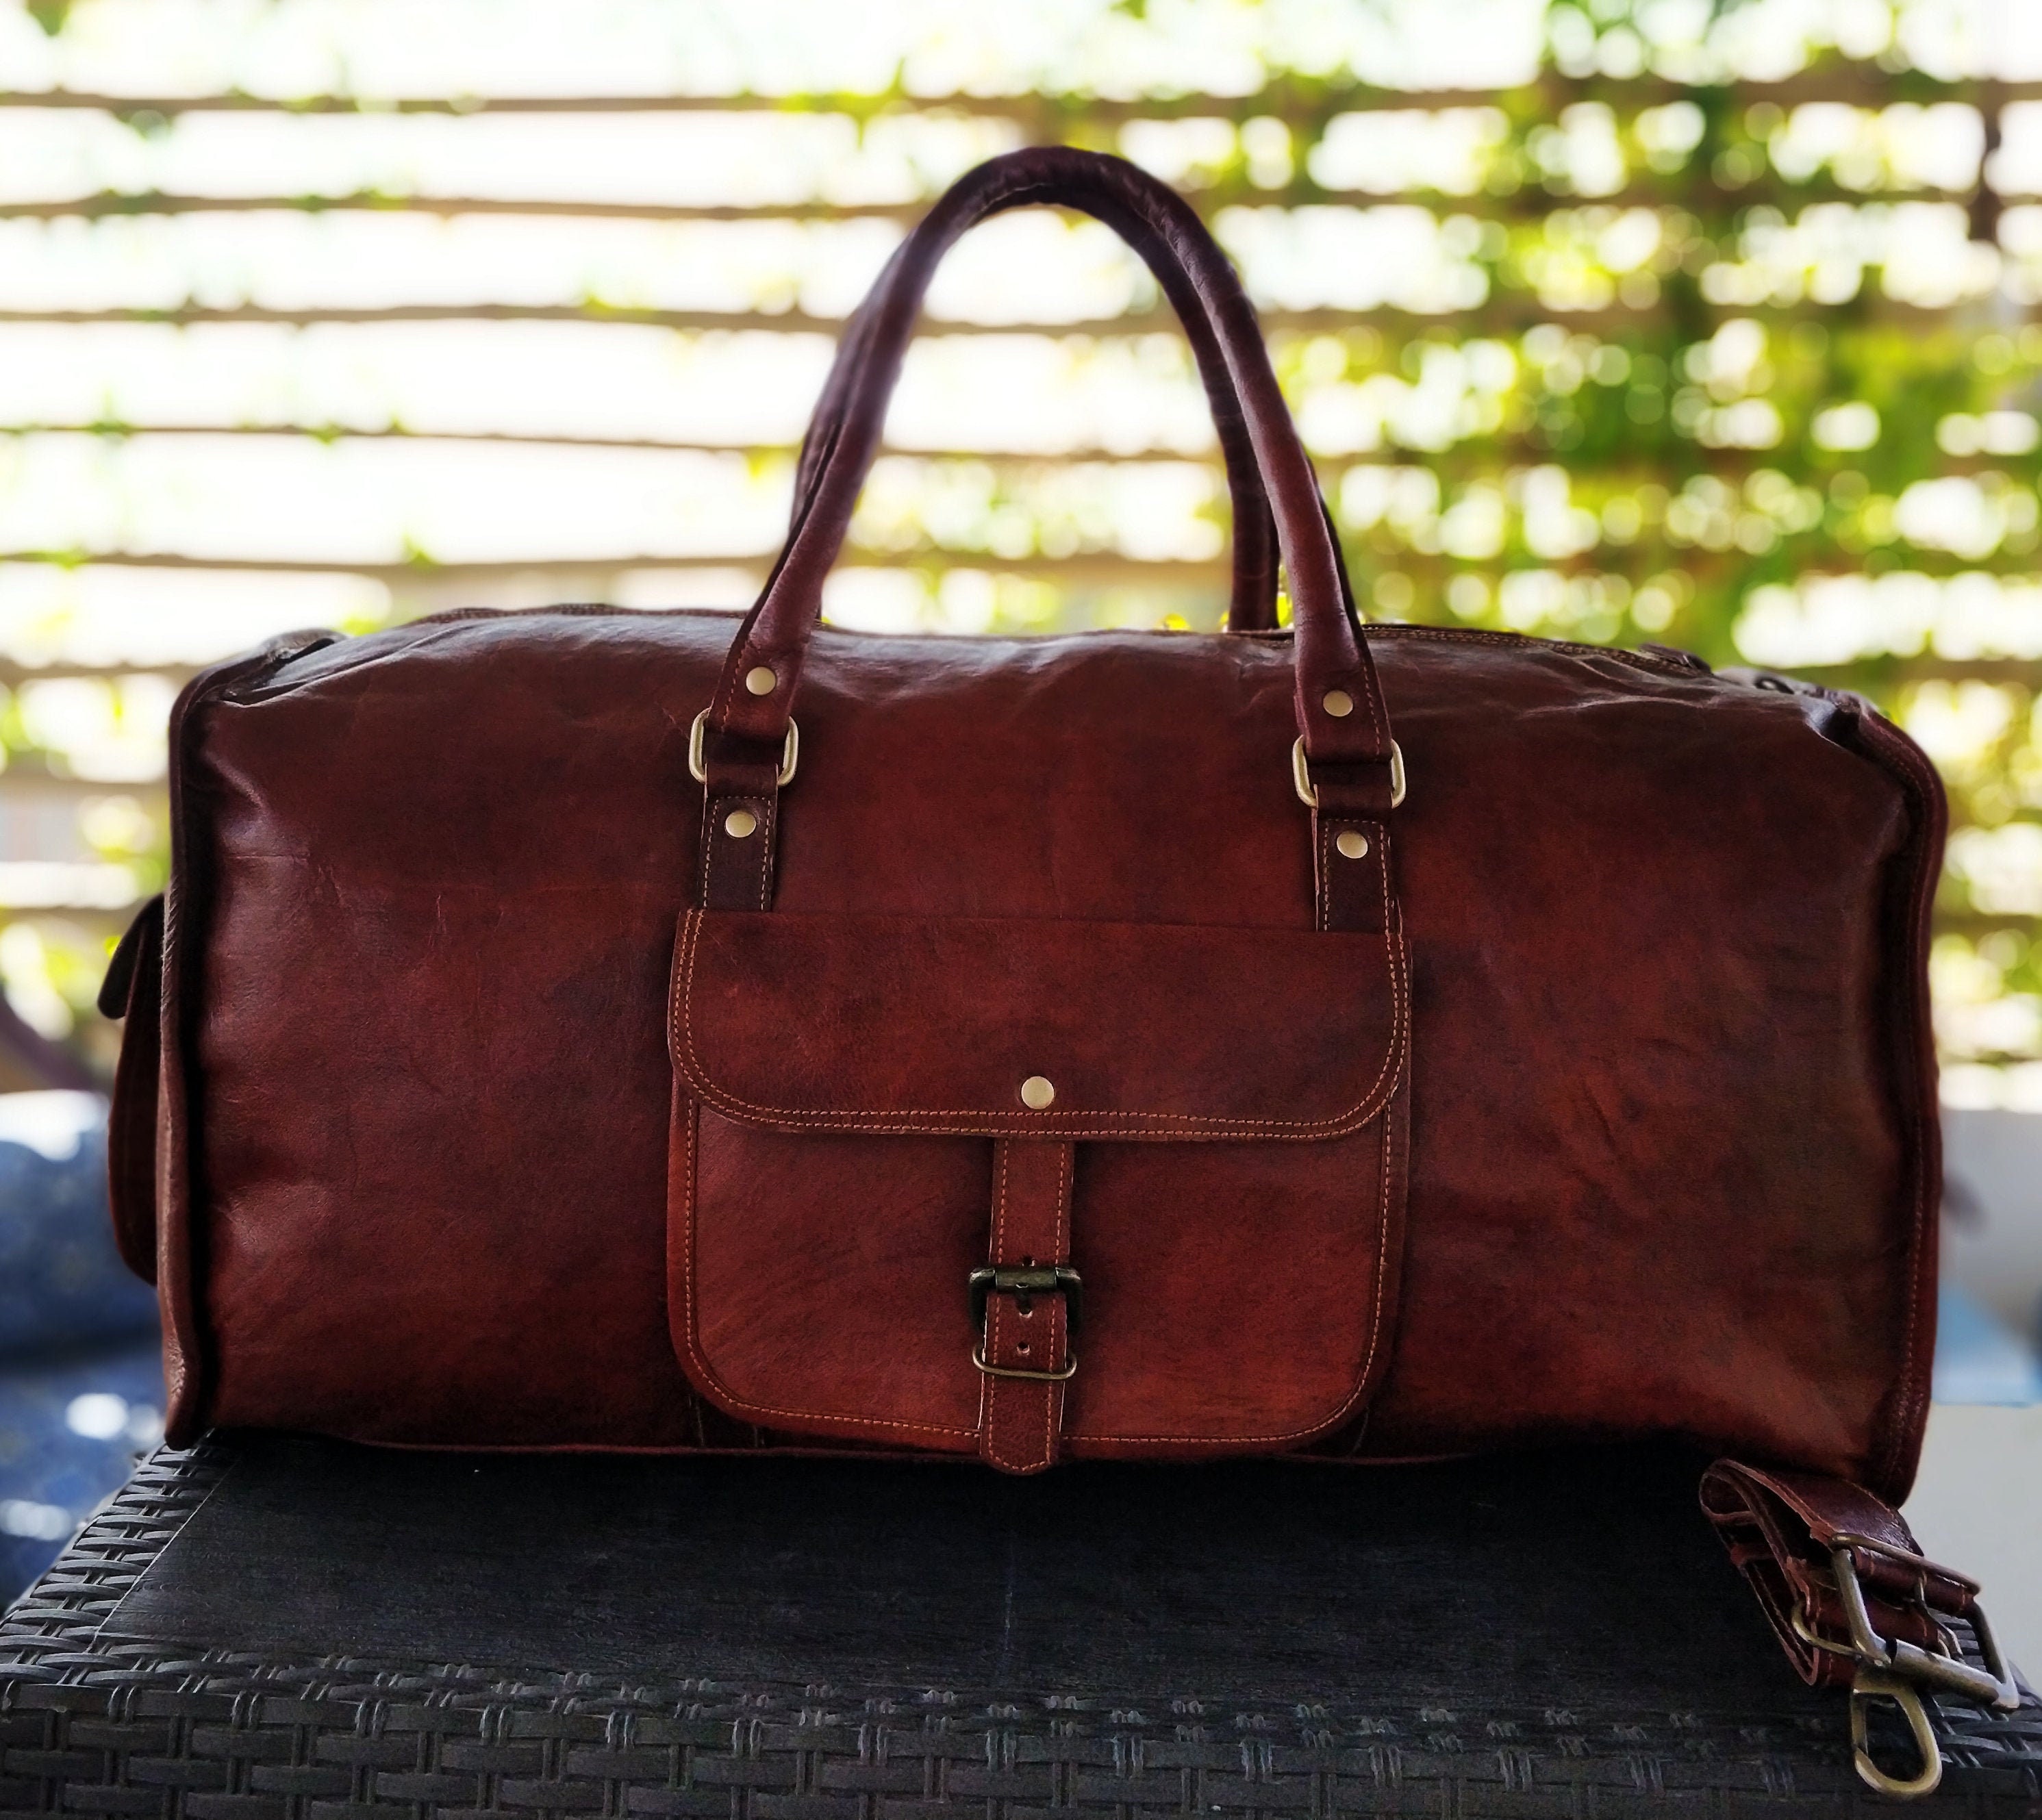 22 Leather Duffle Bag Travel Carry-on Luggage Overnight | Etsy